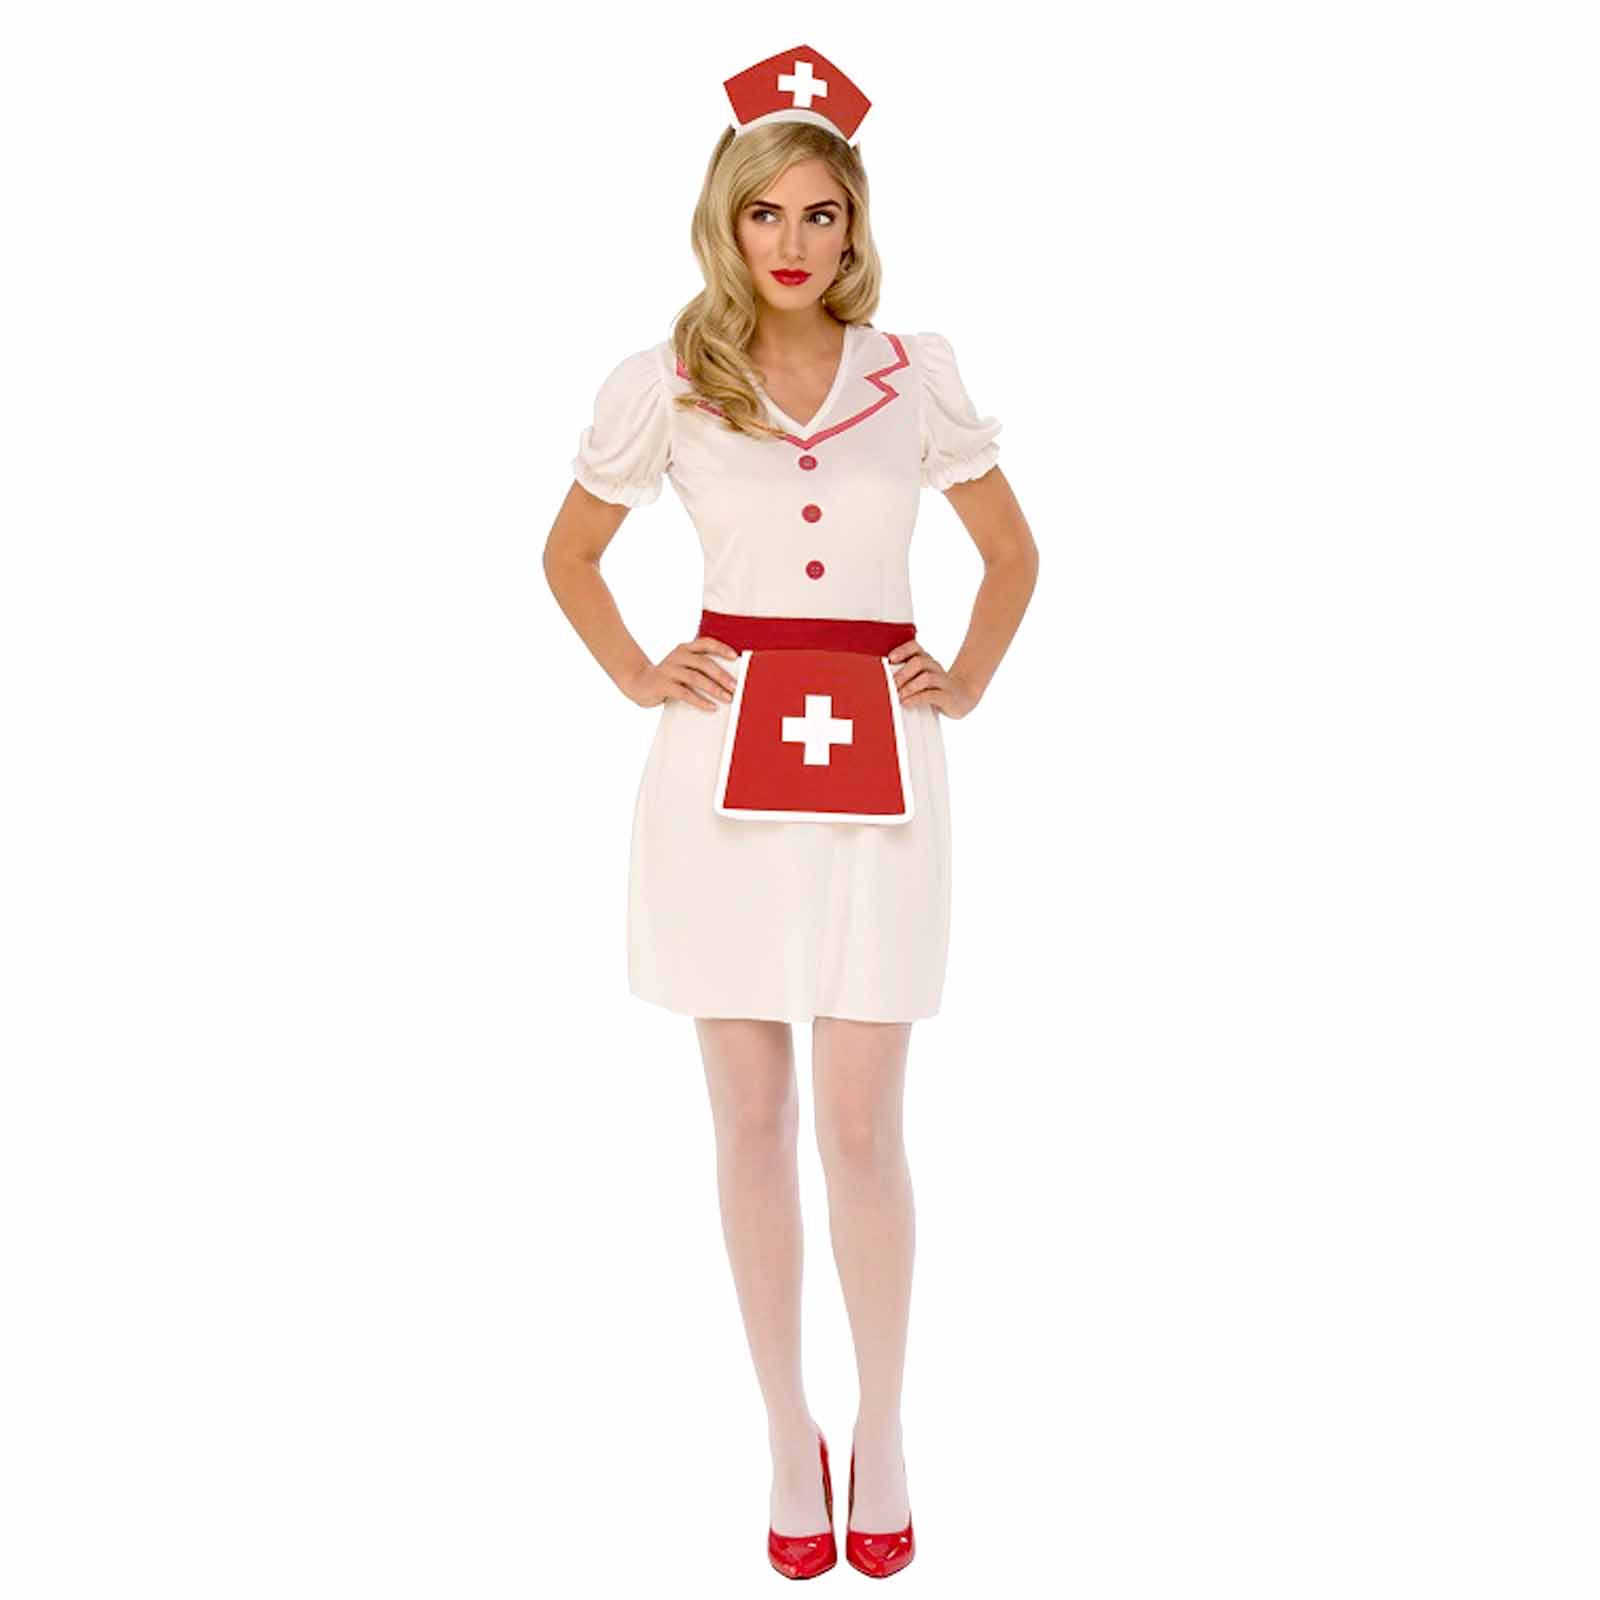 Чувственная медсестра. Наряд медсестры. Платье медсестры. Костюм медички. Костюм медсестрички.